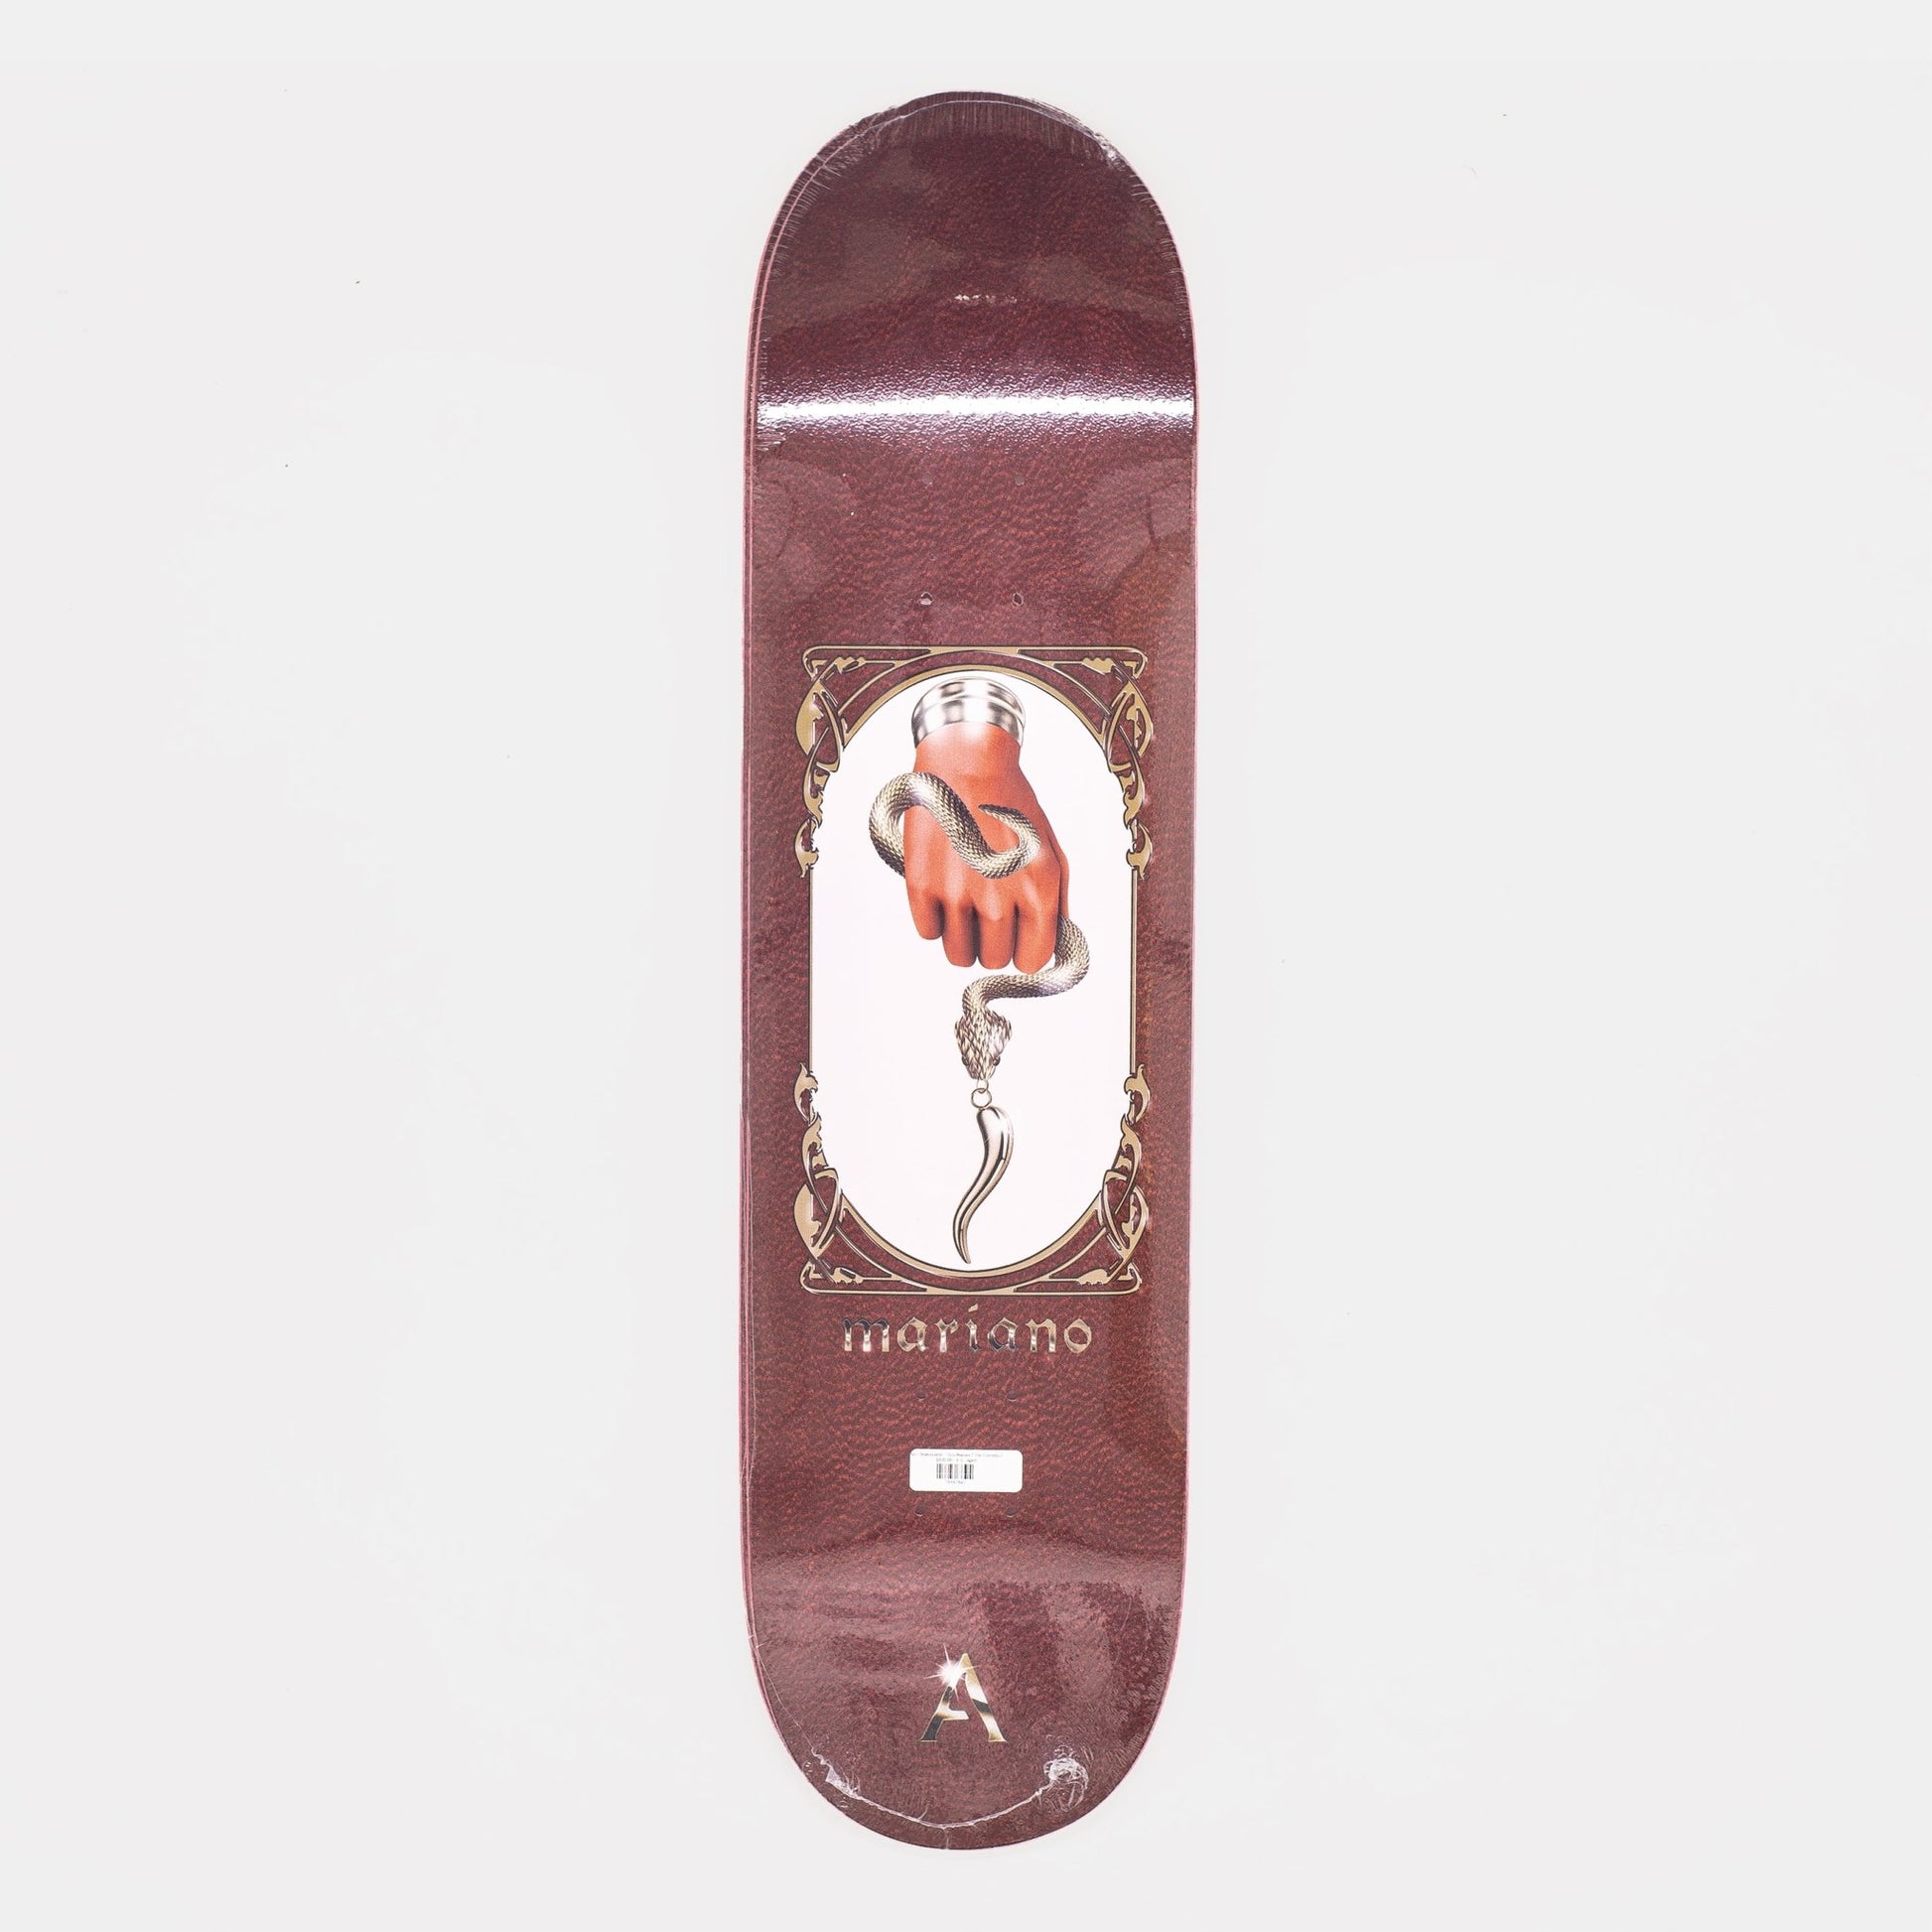 April Skateboards - "Guy Mariano" The Cornetto 2 - Parliamentskateshop